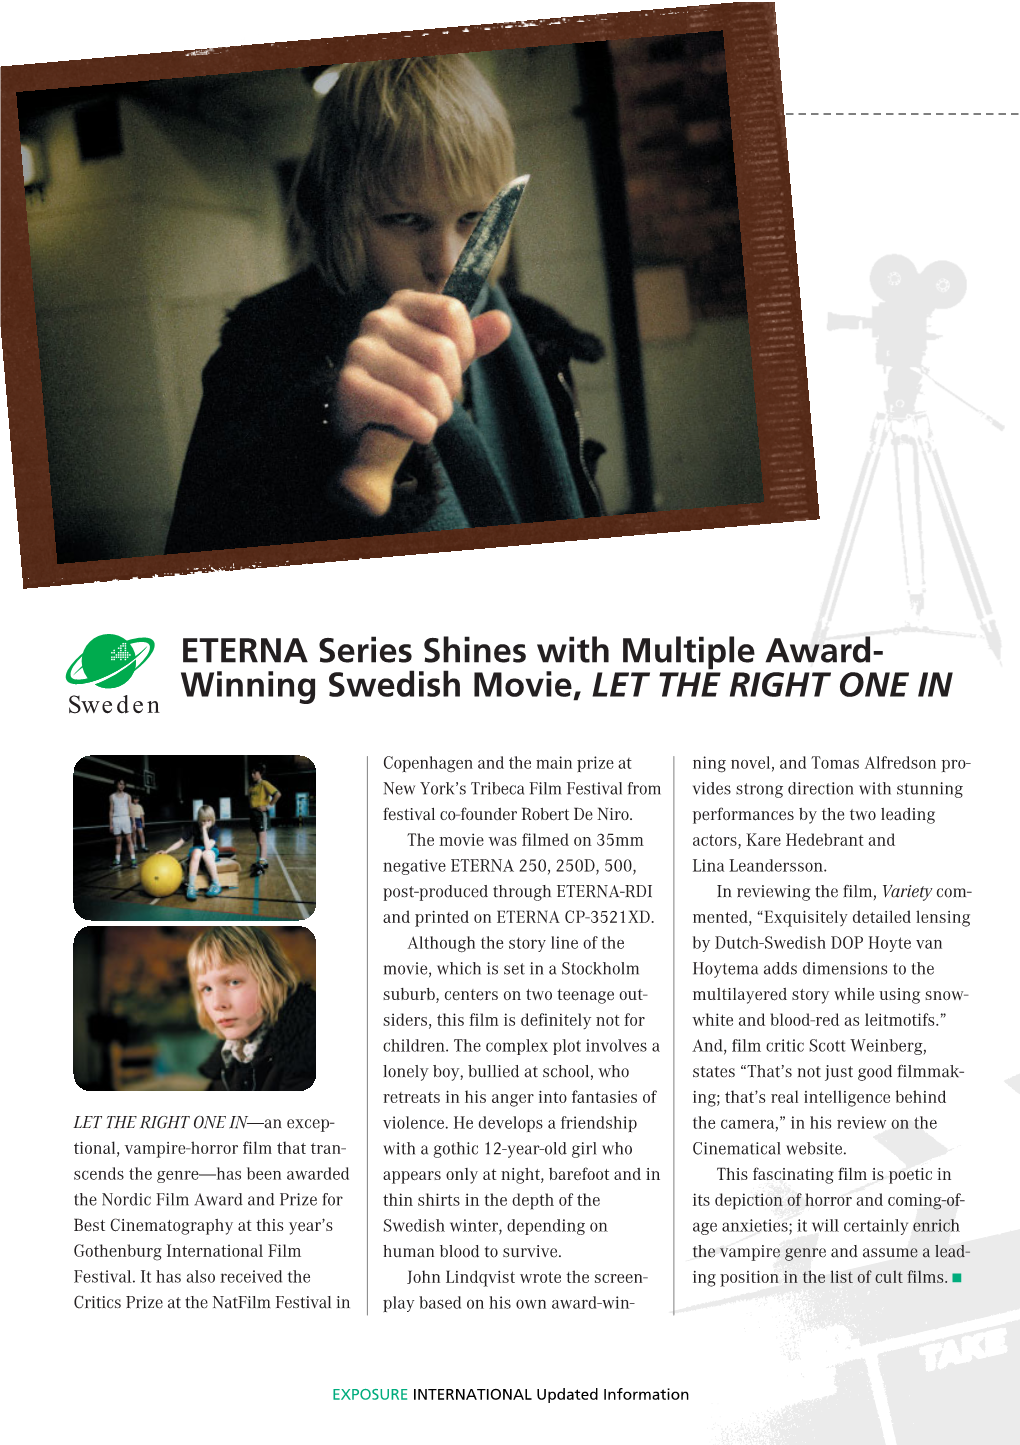 ETERNA Series Shines with Multiple Award-Winning Swedish